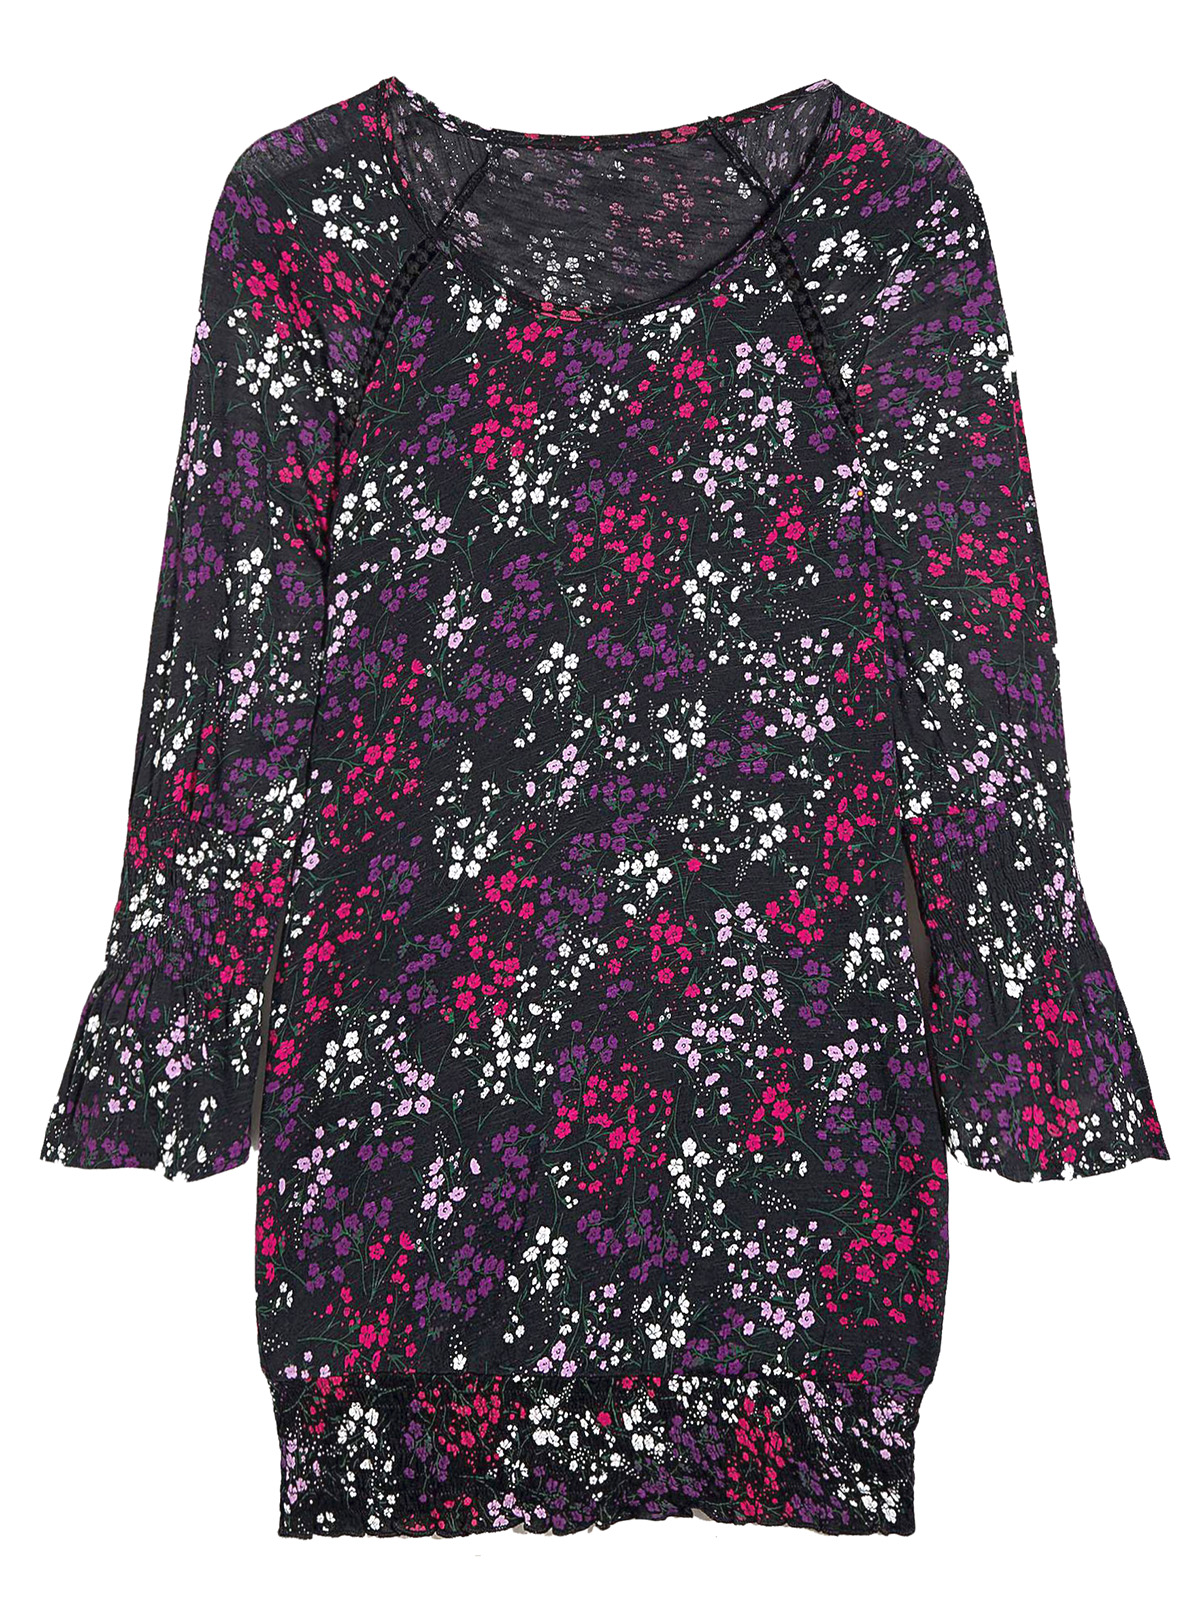 Capsule - - Capsule BLACK Ditsy Floral 3/4 Sleeve Gypsy Top - Plus Size ...